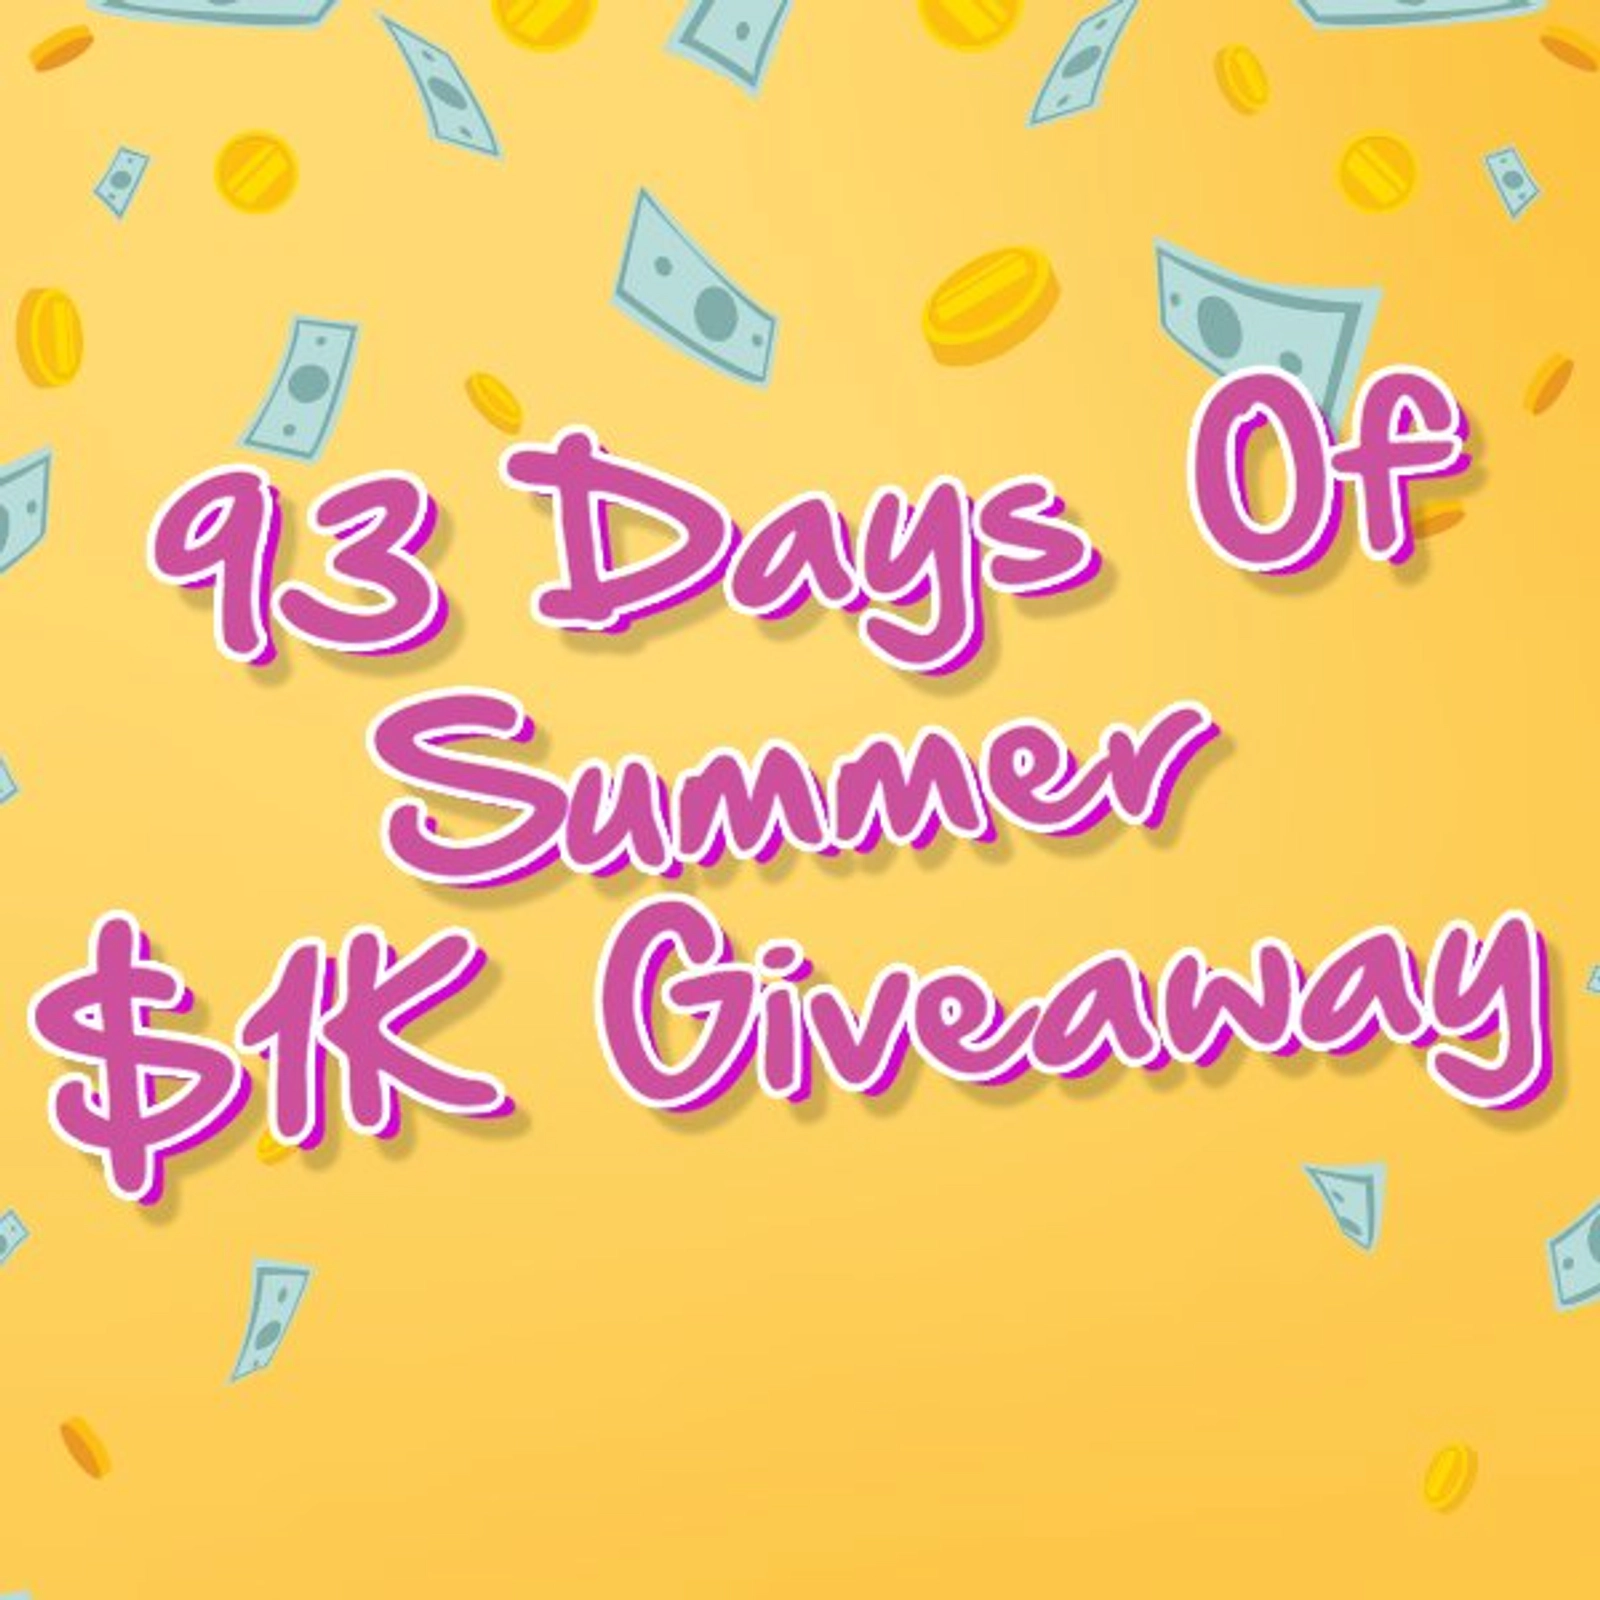 93 Days Of Summer 1K Giveaway - Thumbnail Image